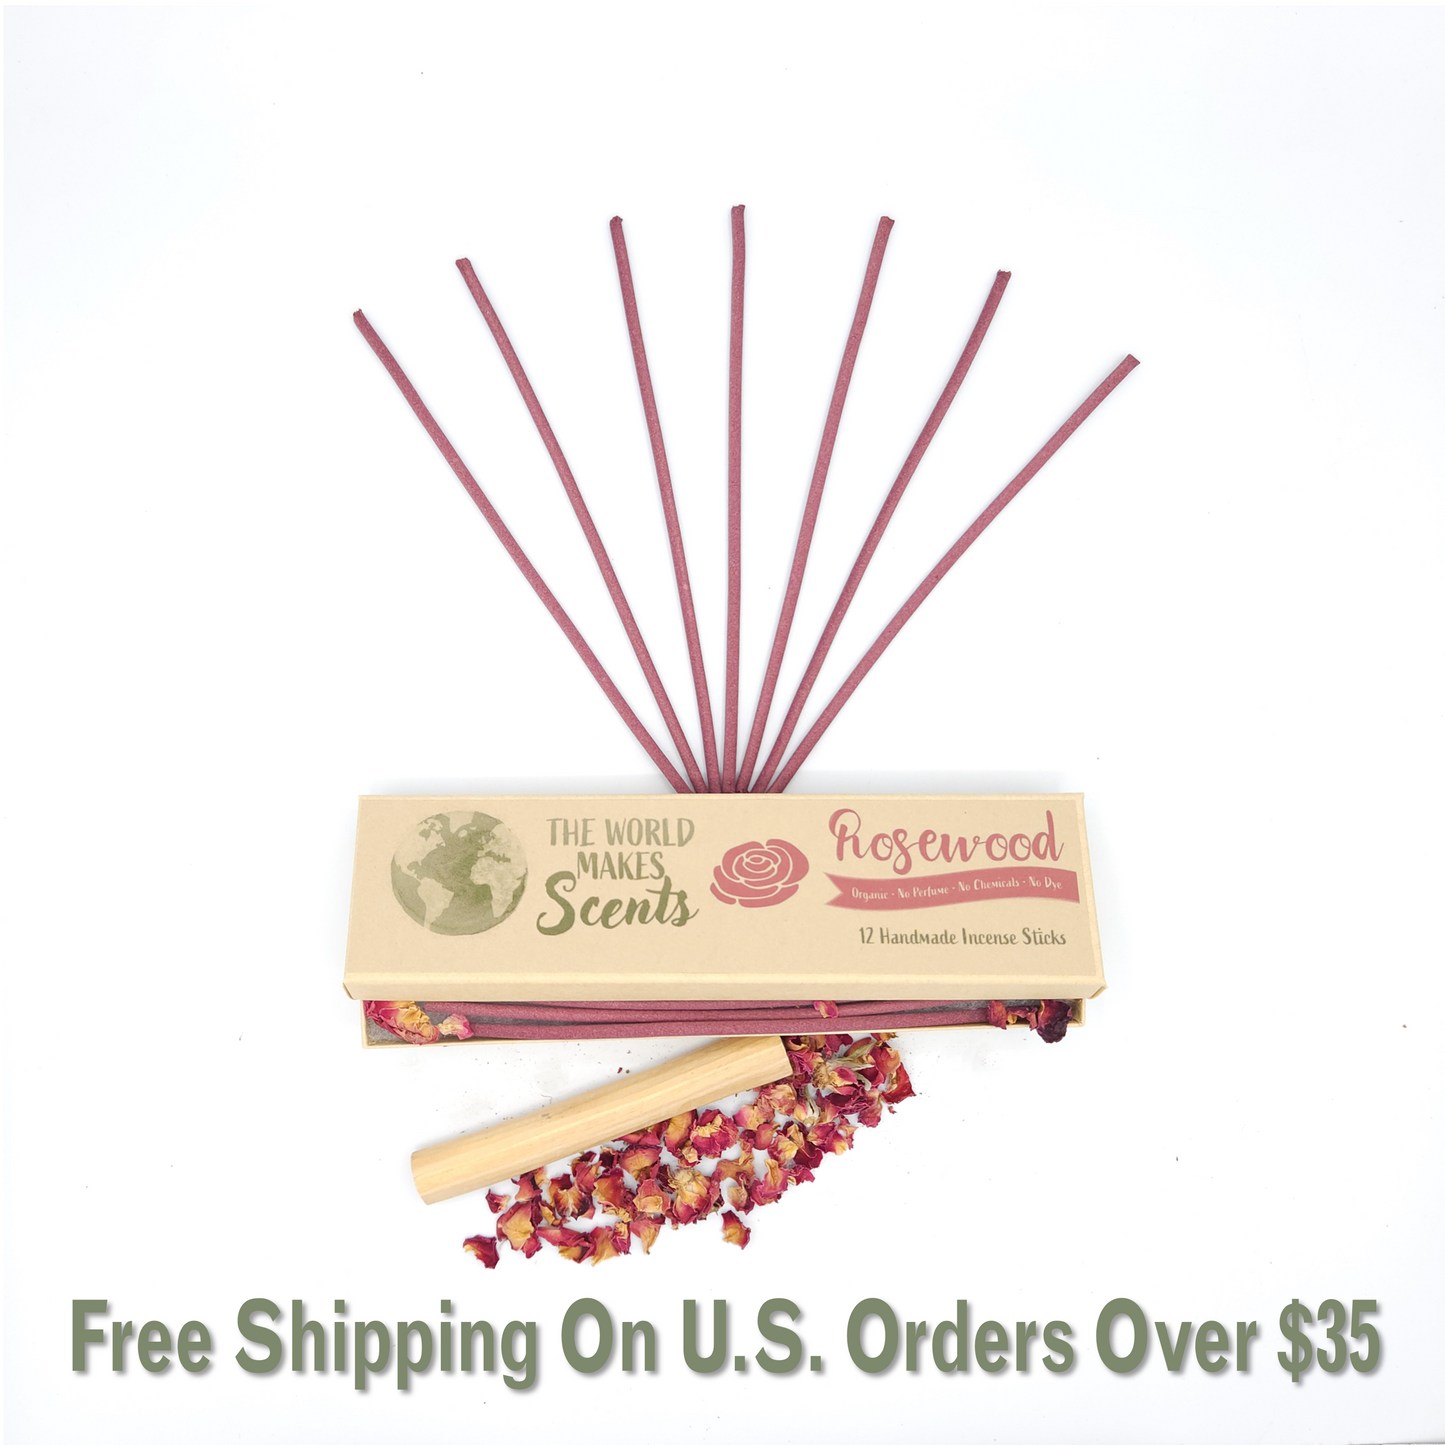 RoseWood Organic Incense Sticks